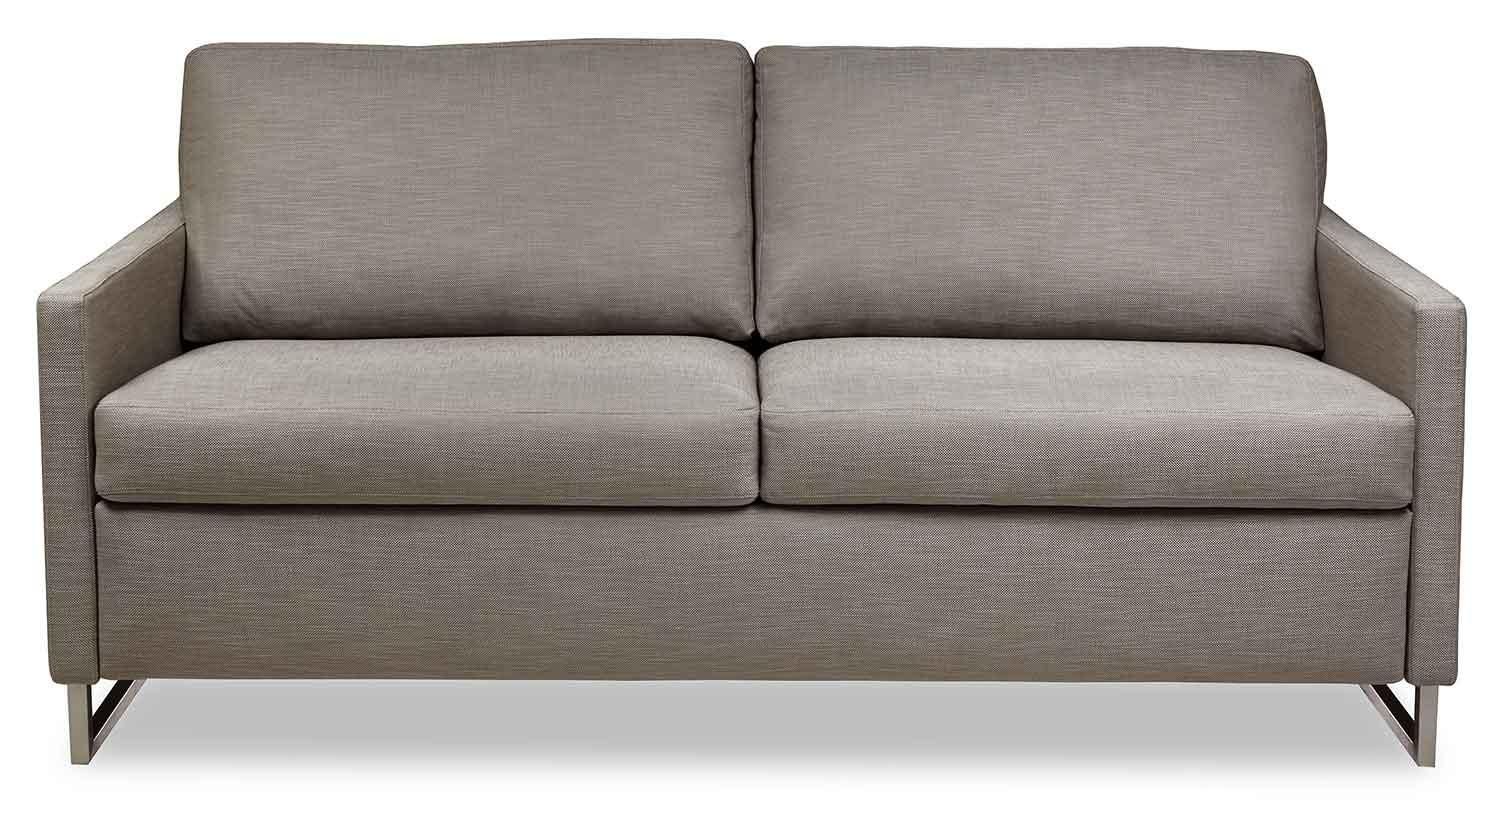 Circle Furniture – Breckin Comfort Sleeper | Sleepers Ma | Sleeper Intended For Comfort Sleeper Sofas (View 18 of 22)